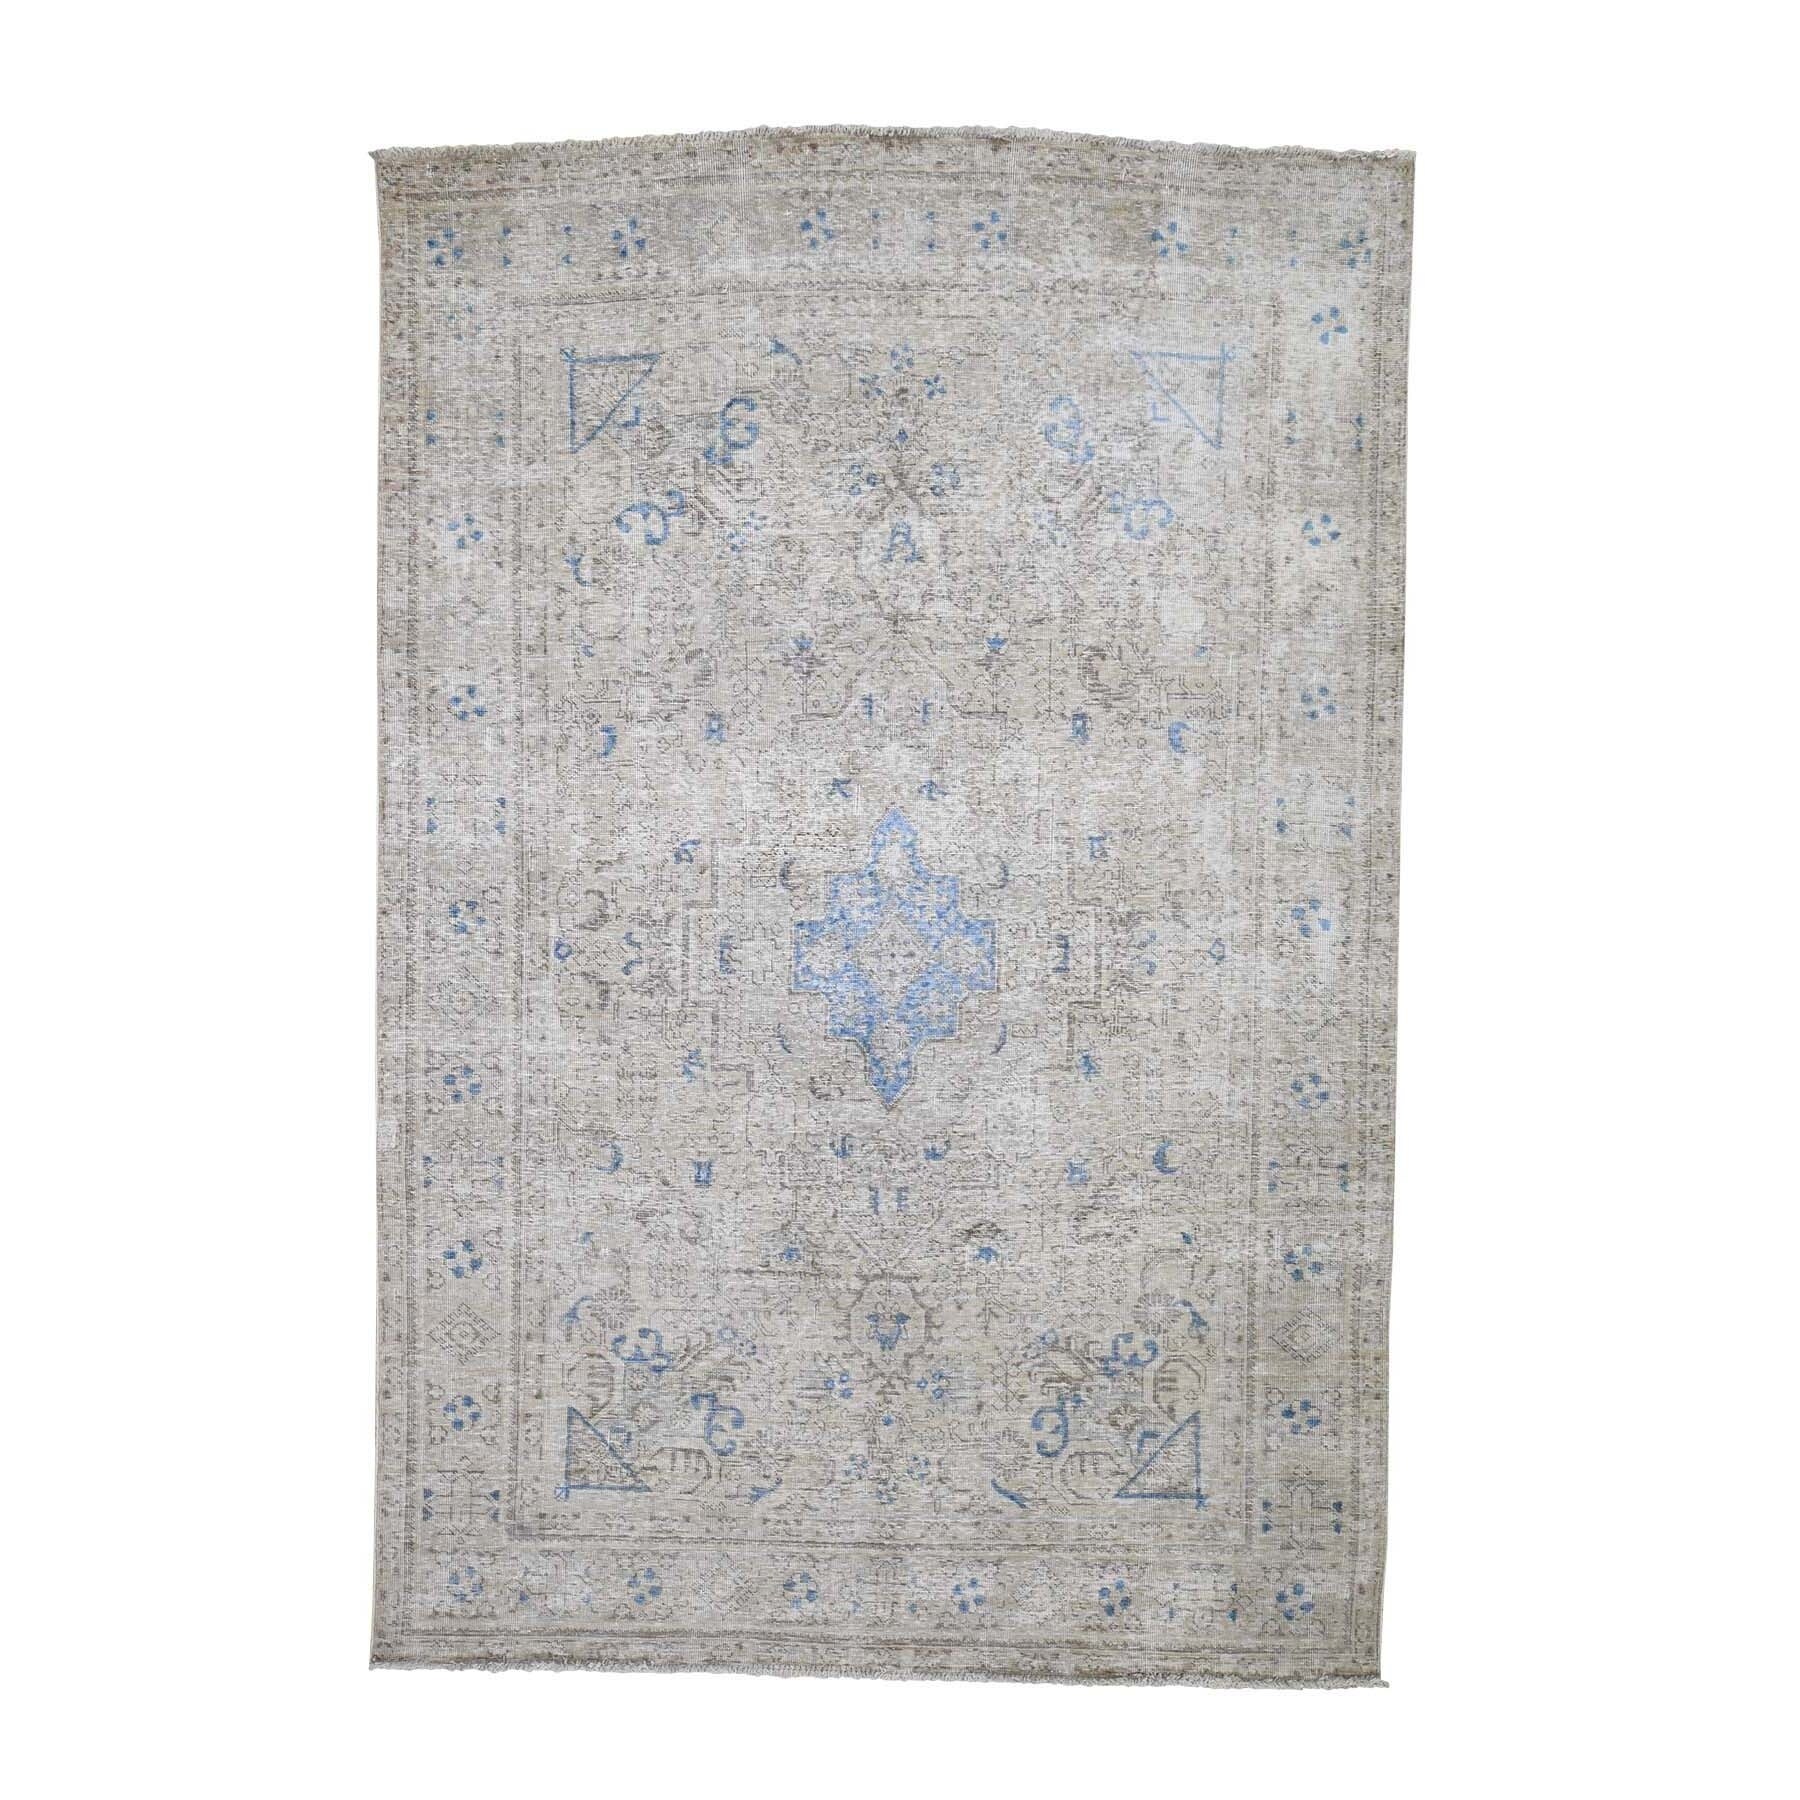 Image result for white tabriz rugs